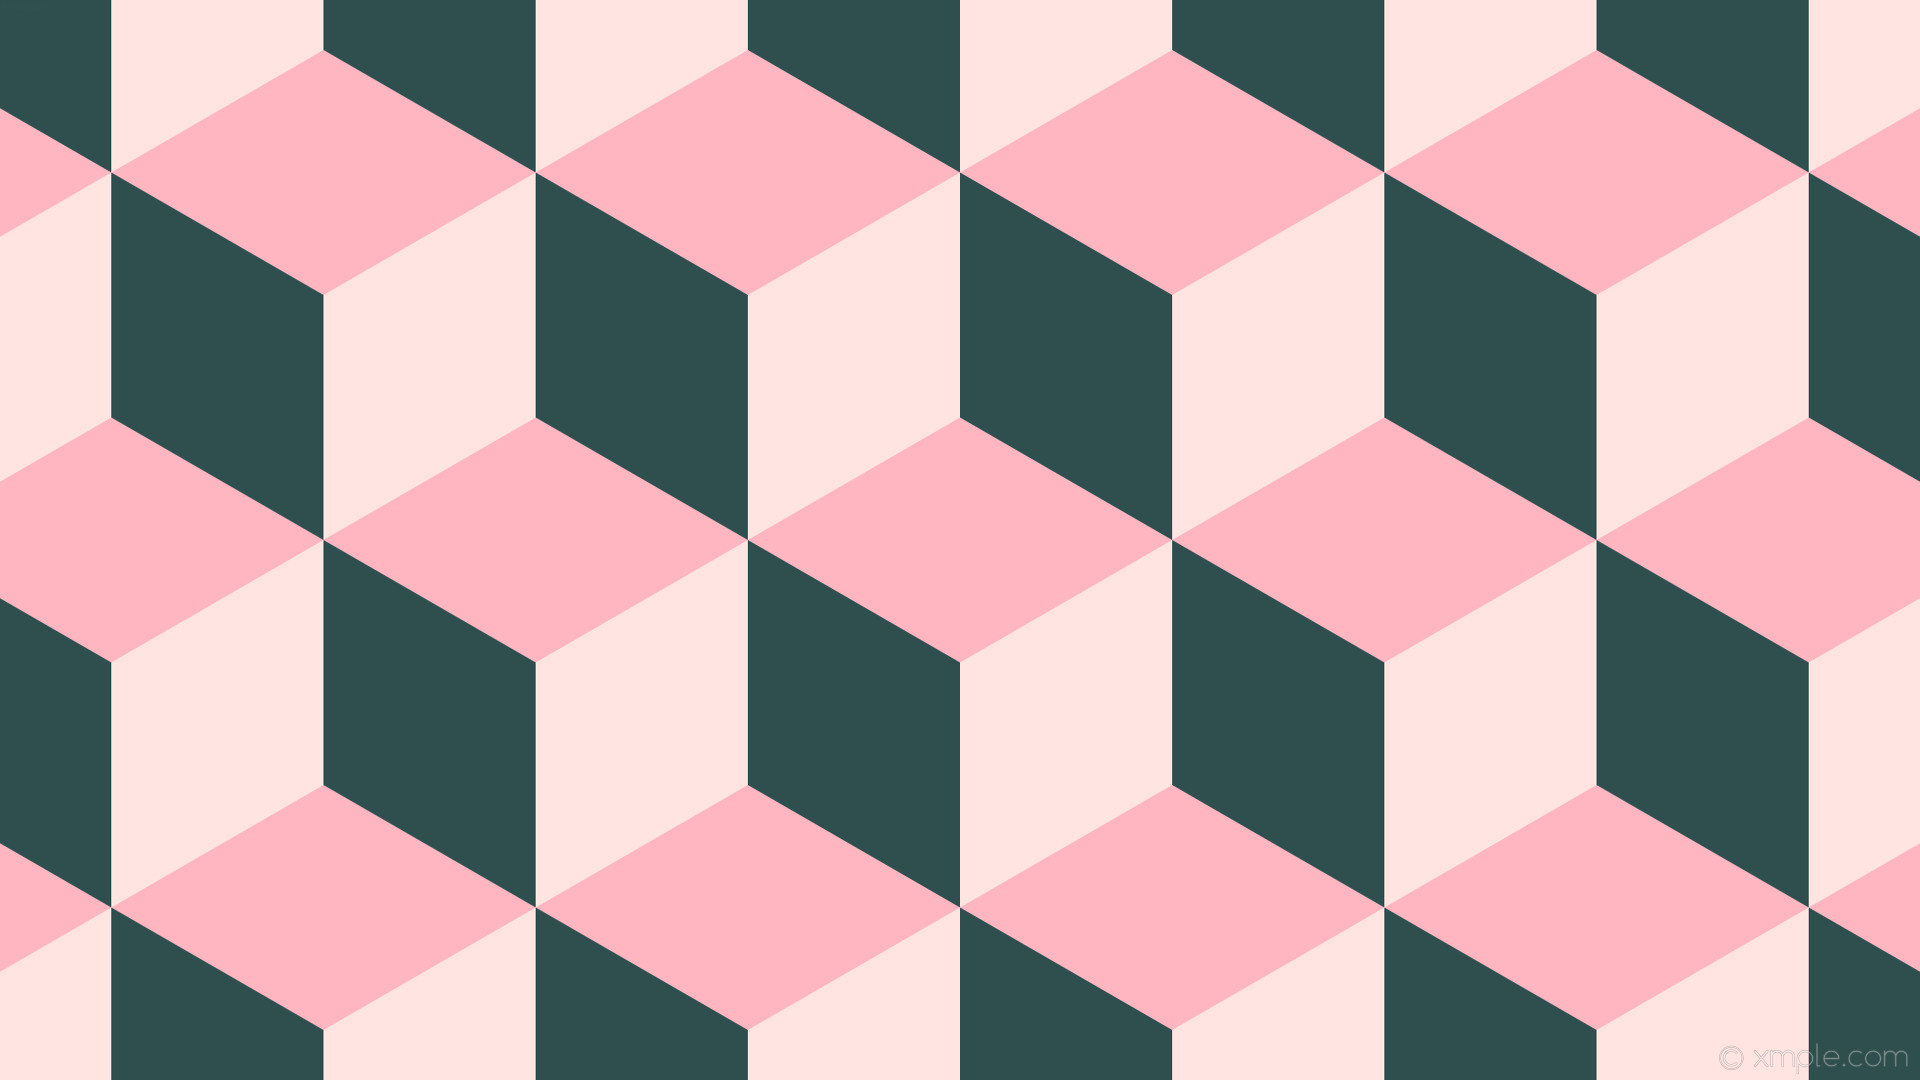 1920x1080 wallpaper 3d cubes grey white pink light pink dark slate gray misty rose  #ffb6c1 #